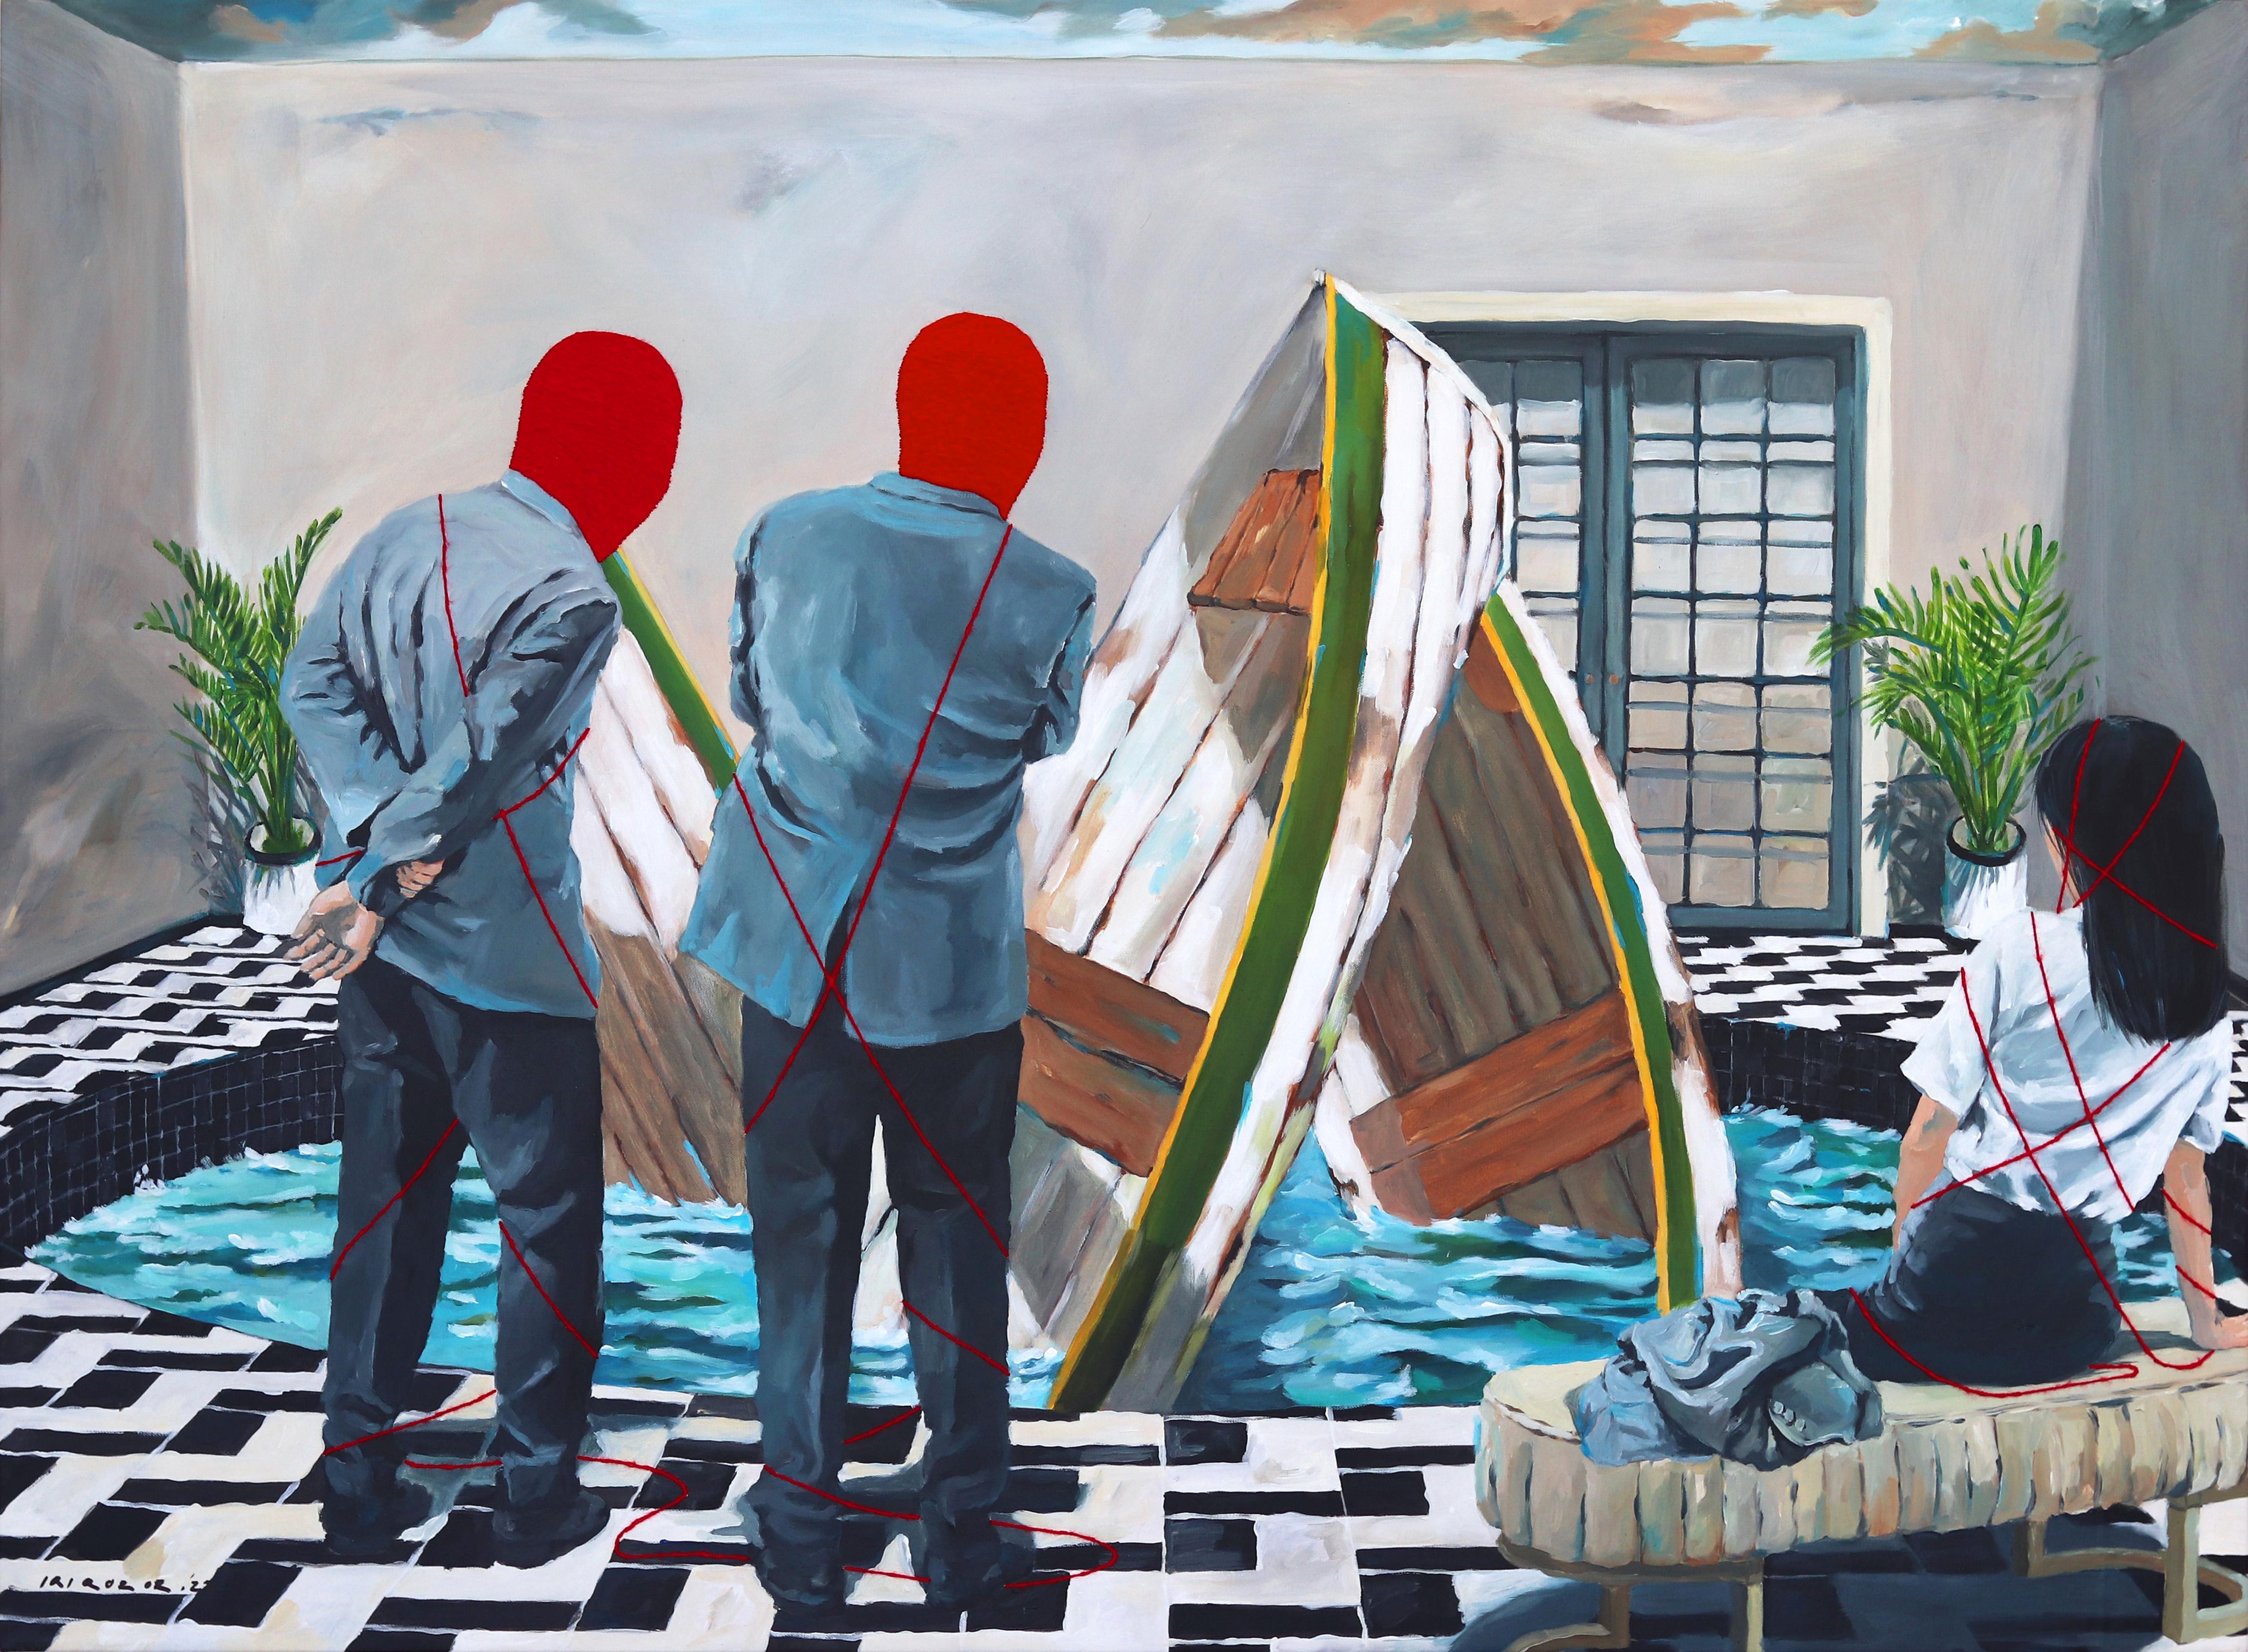 Three Row Boat - Original Surrealist Mixed Media on Canvas by Iqi Qoror